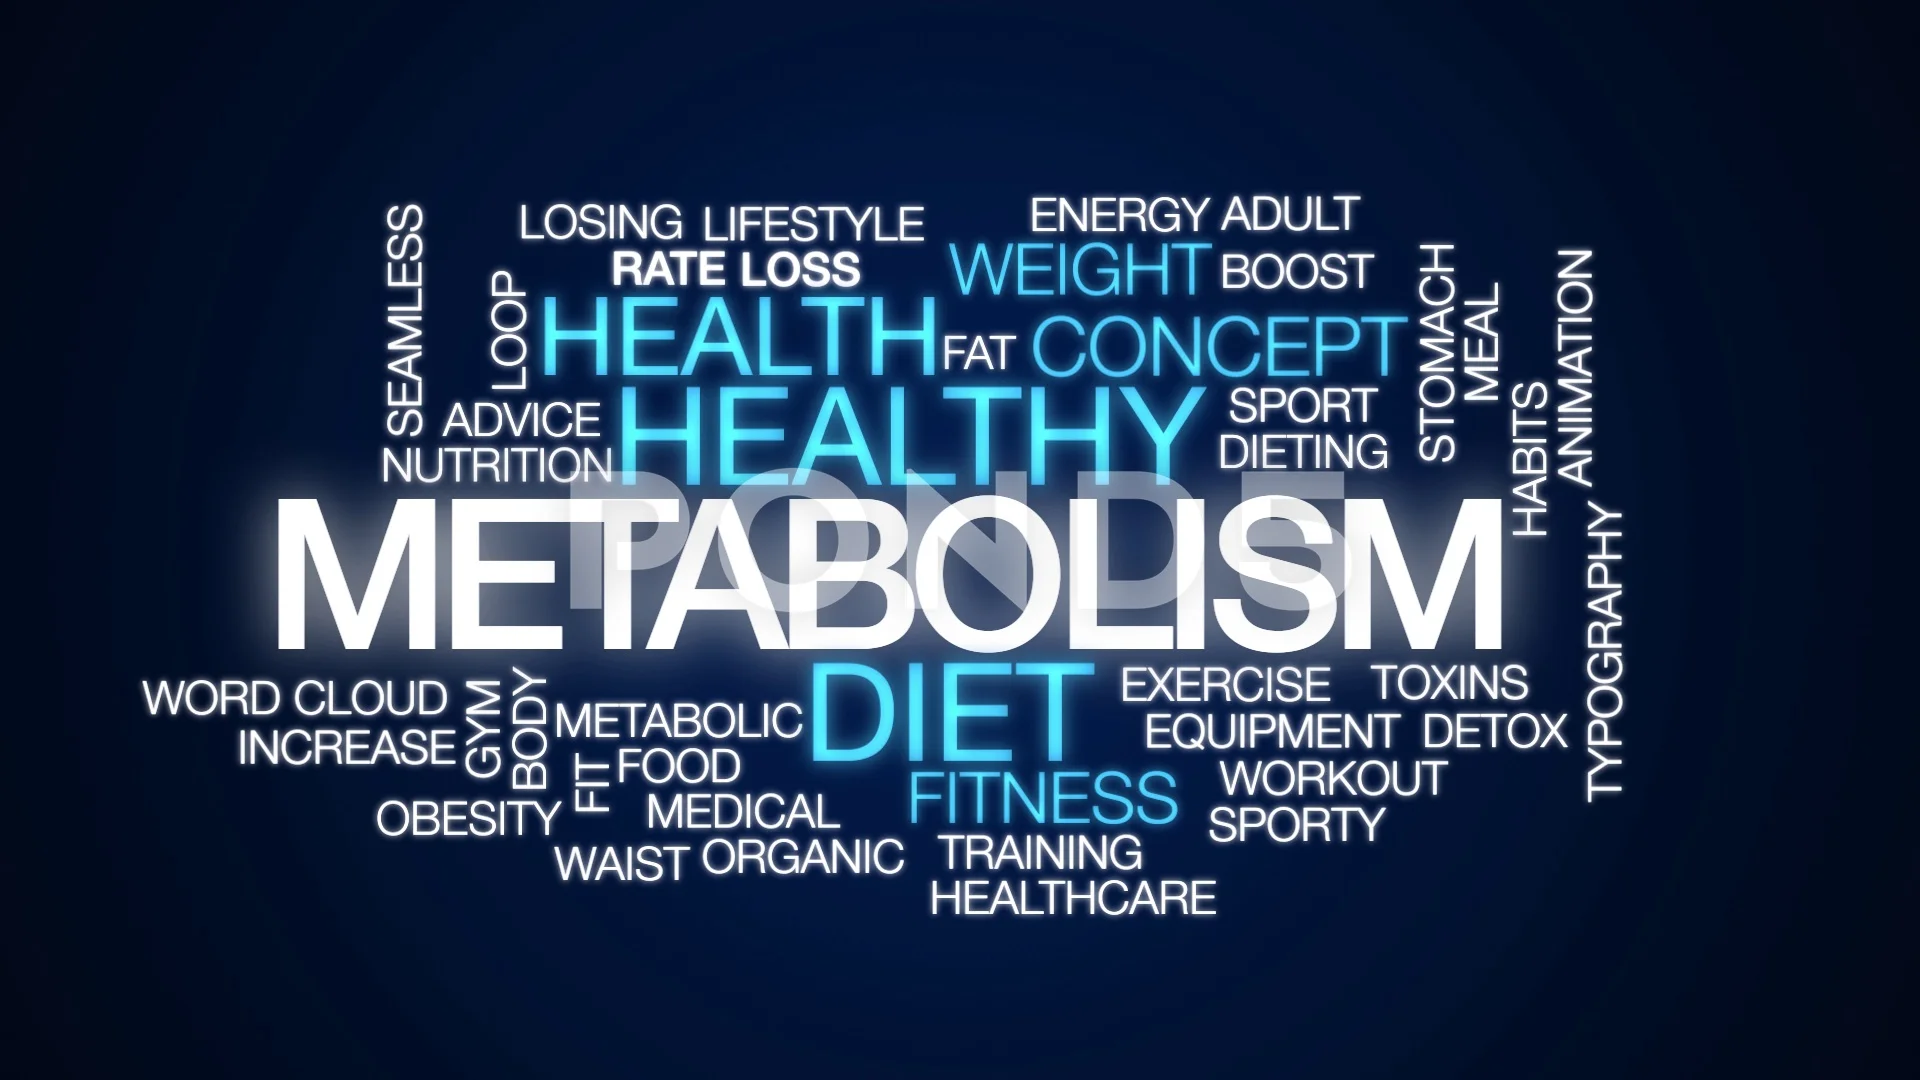 10 Free Metabolism  Metabolic Images  Pixabay